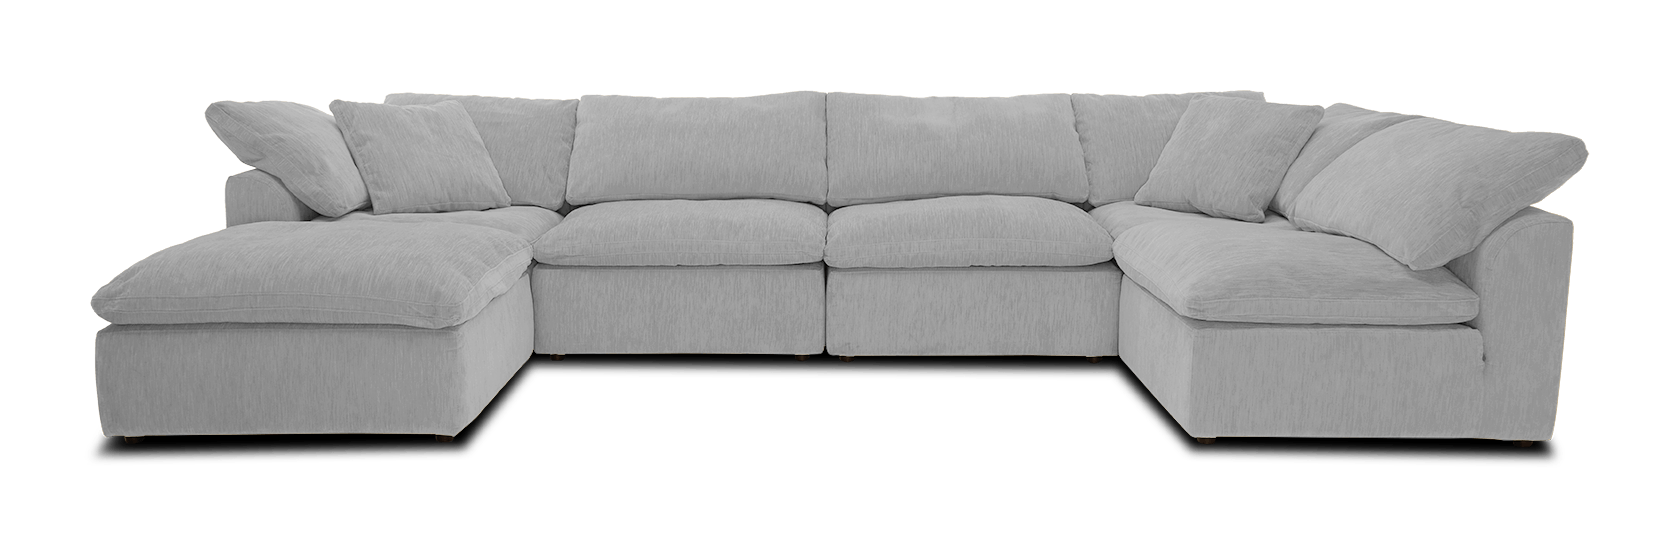 bryant modular grand sofa bumper sectional milo dove